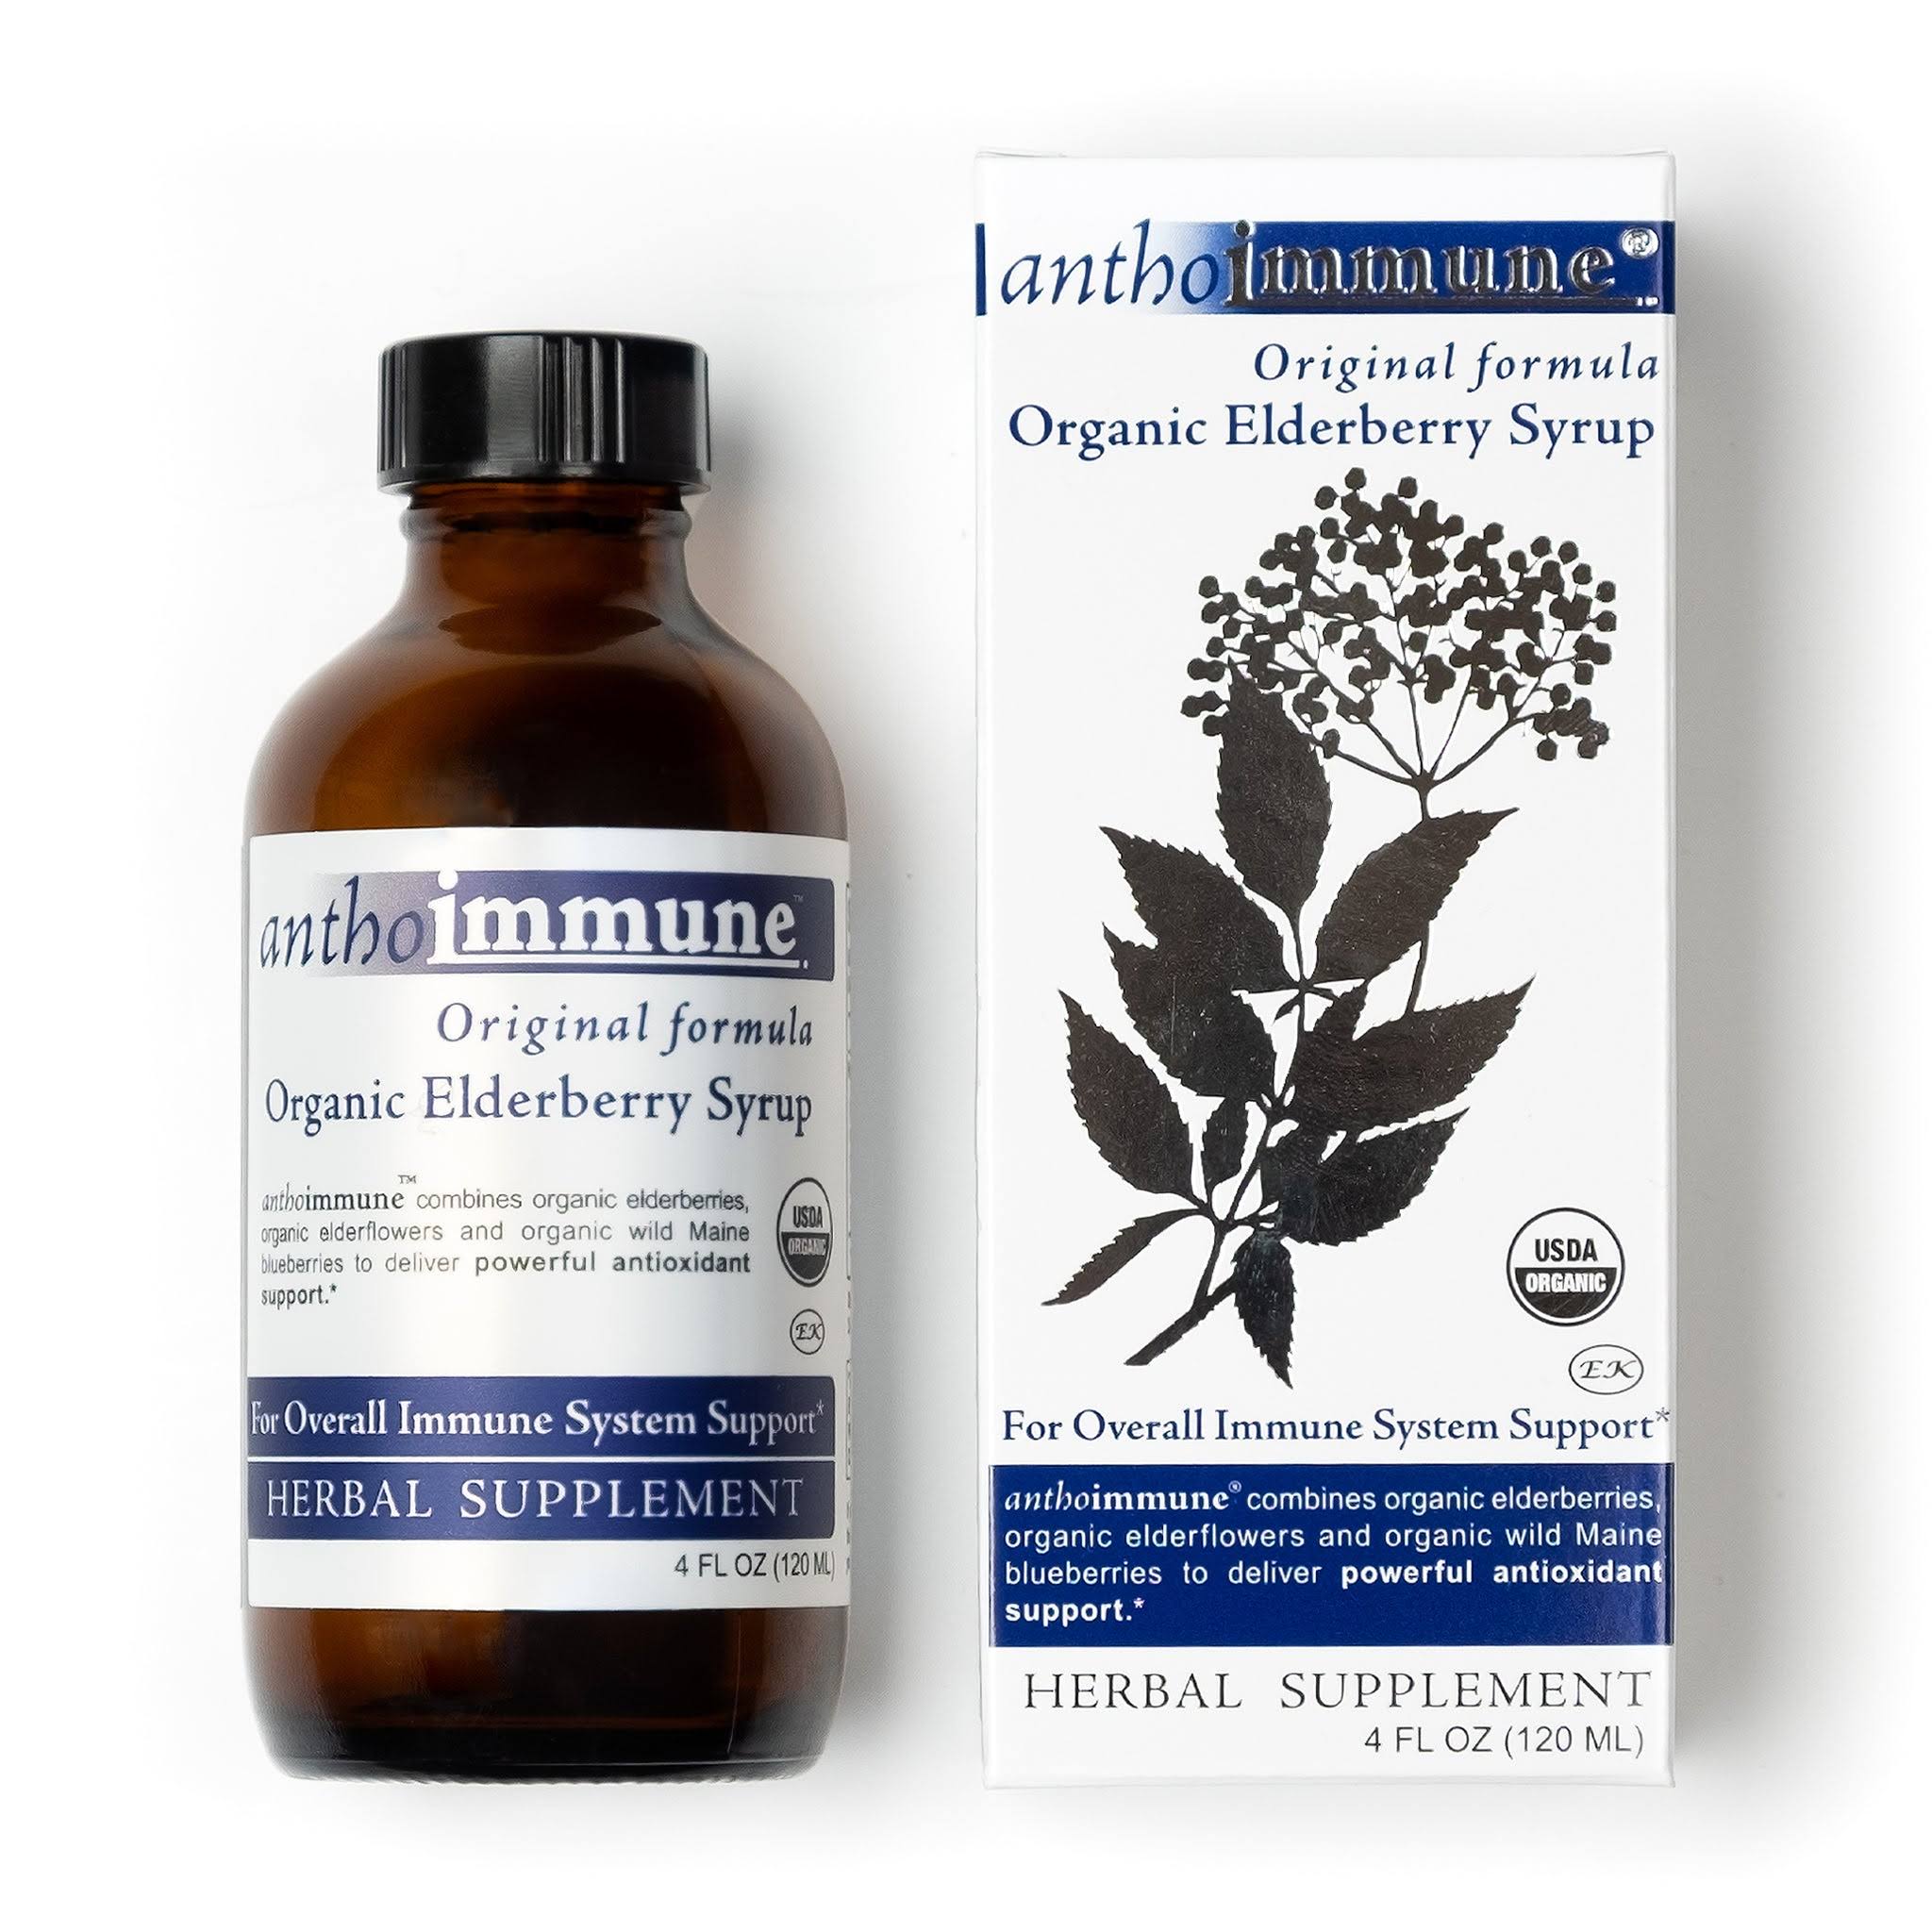 Maine Medicinals Inc Anthoimmune Organic Elderberry Syrup - 8oz